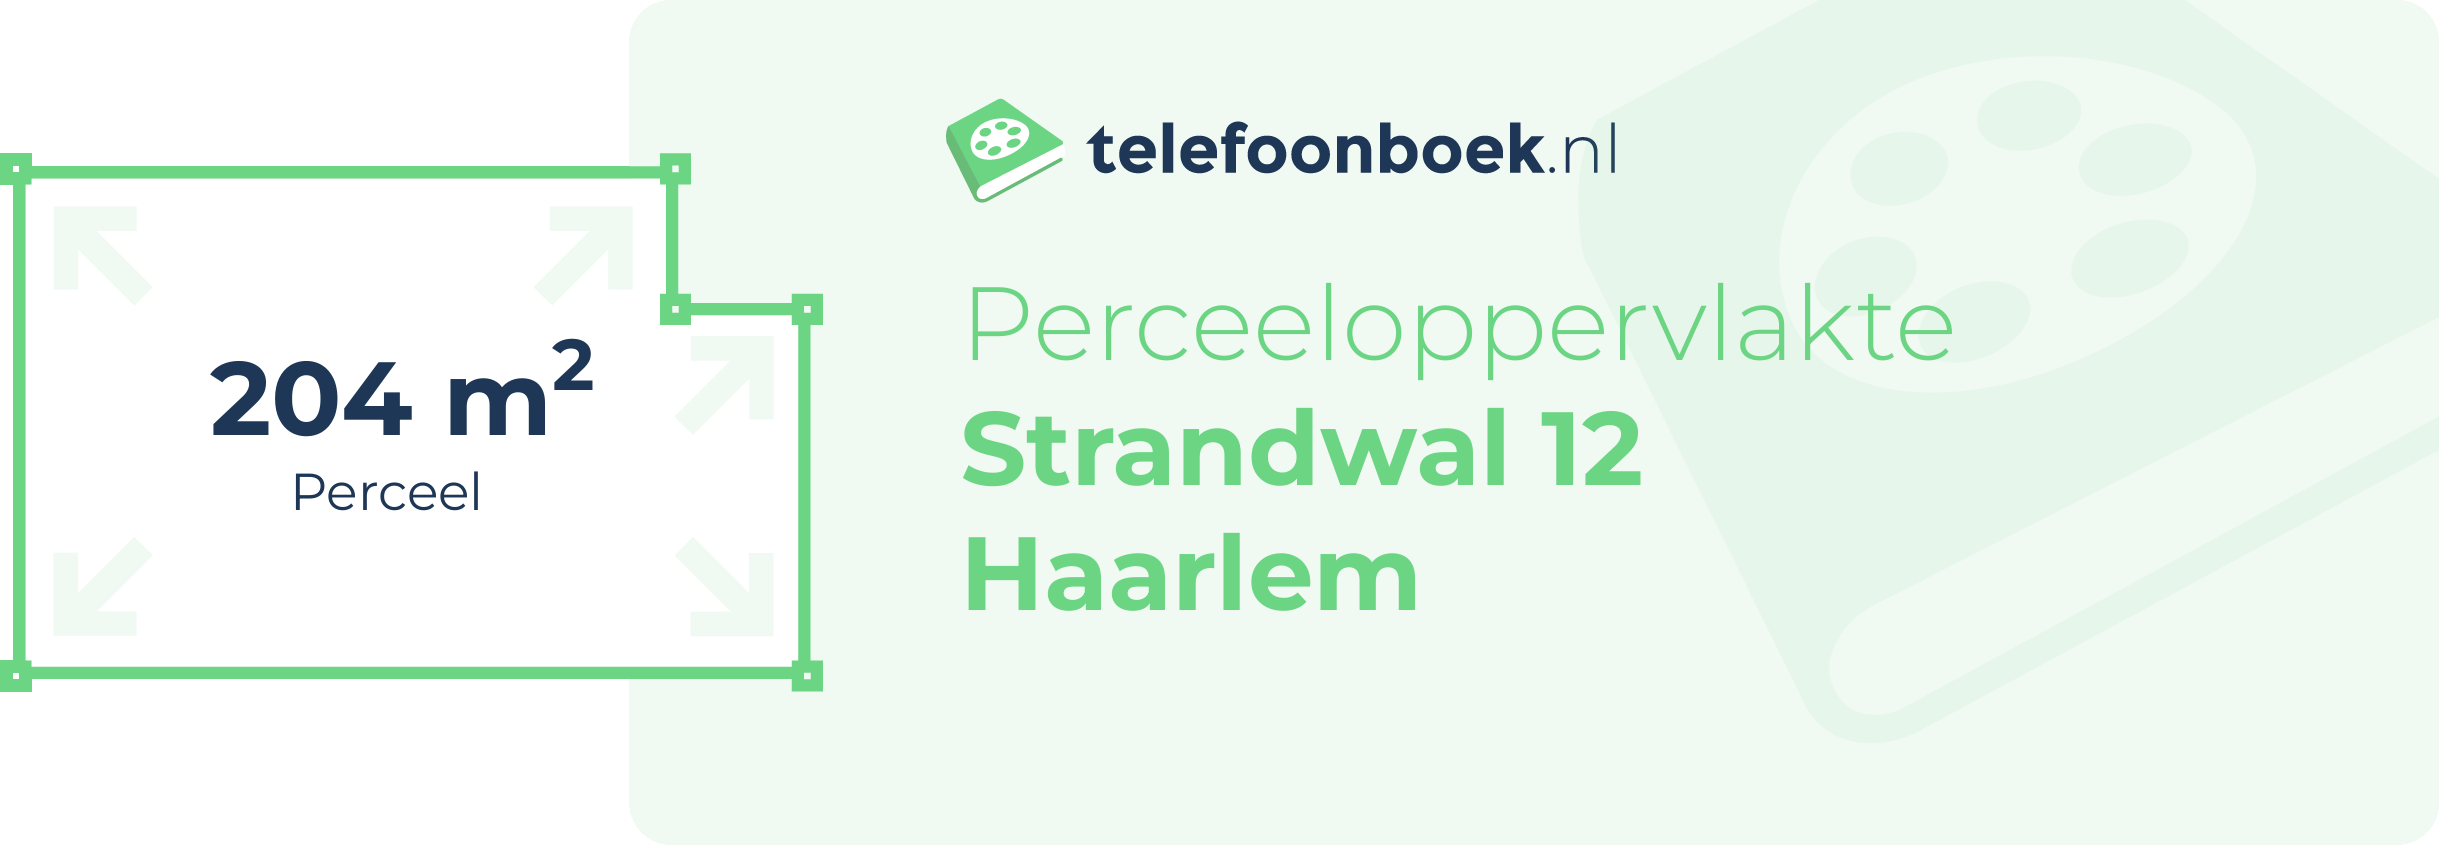 Perceeloppervlakte Strandwal 12 Haarlem